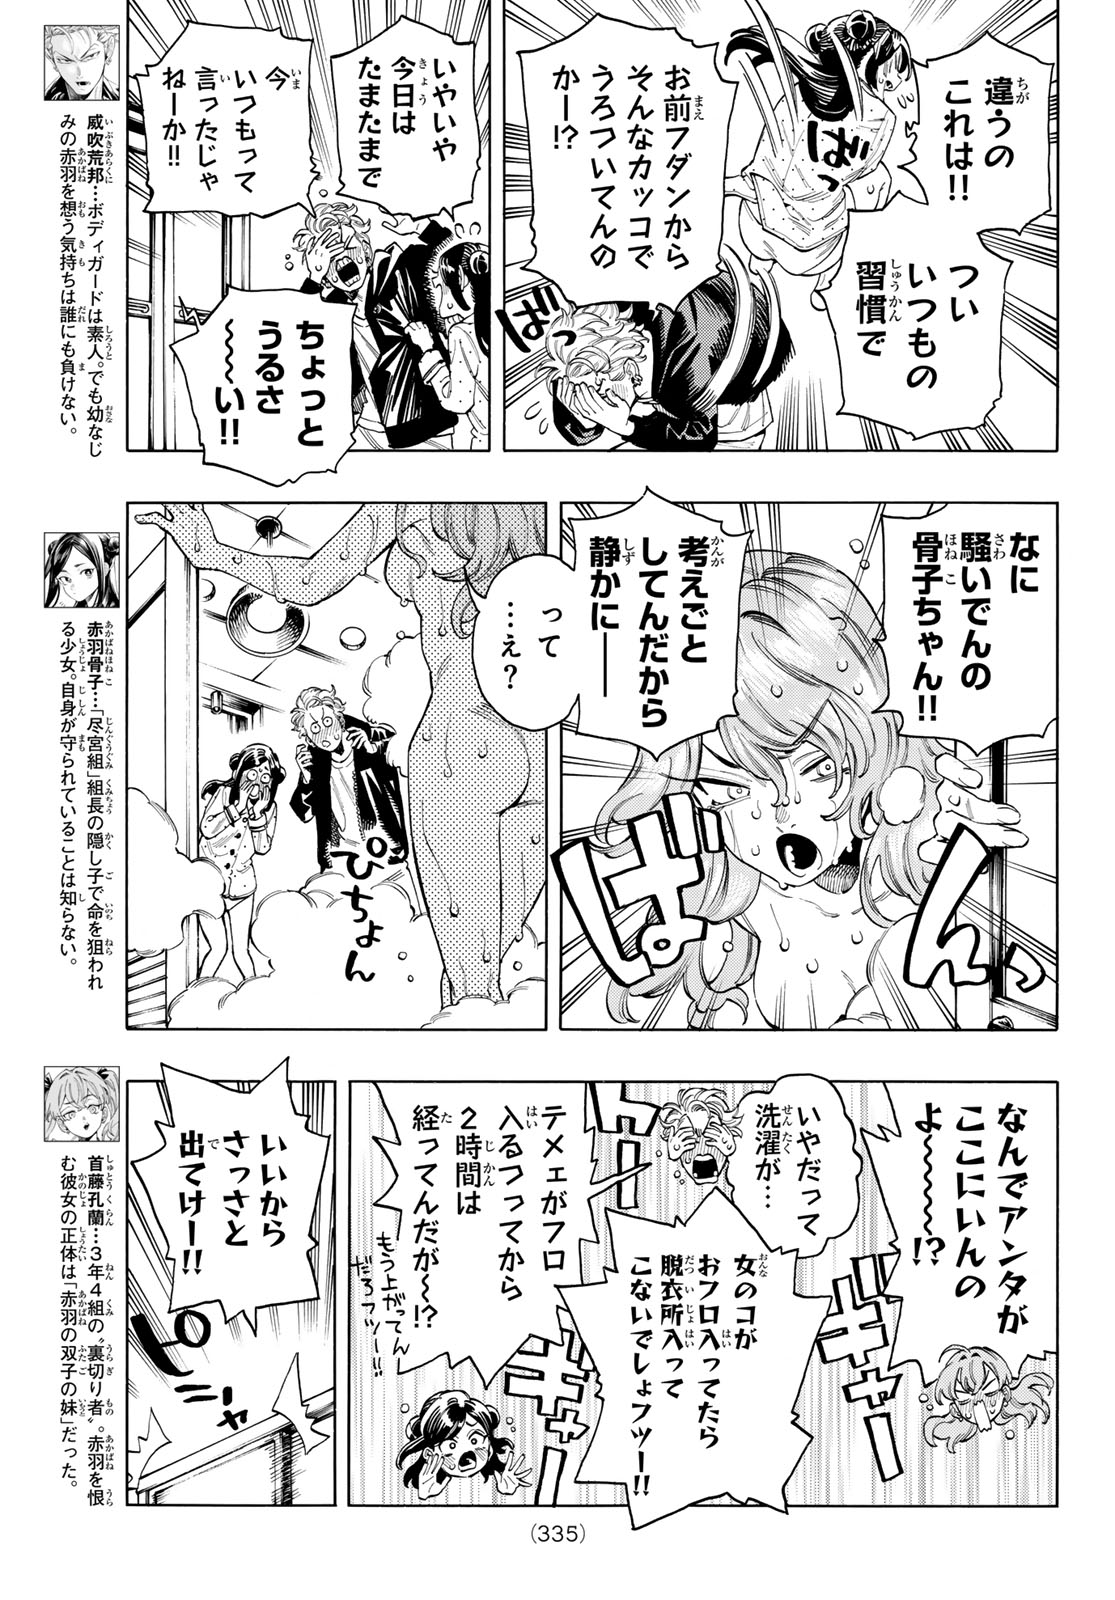 Akabane Honeko no Bodyguard - Chapter 74 - Page 3